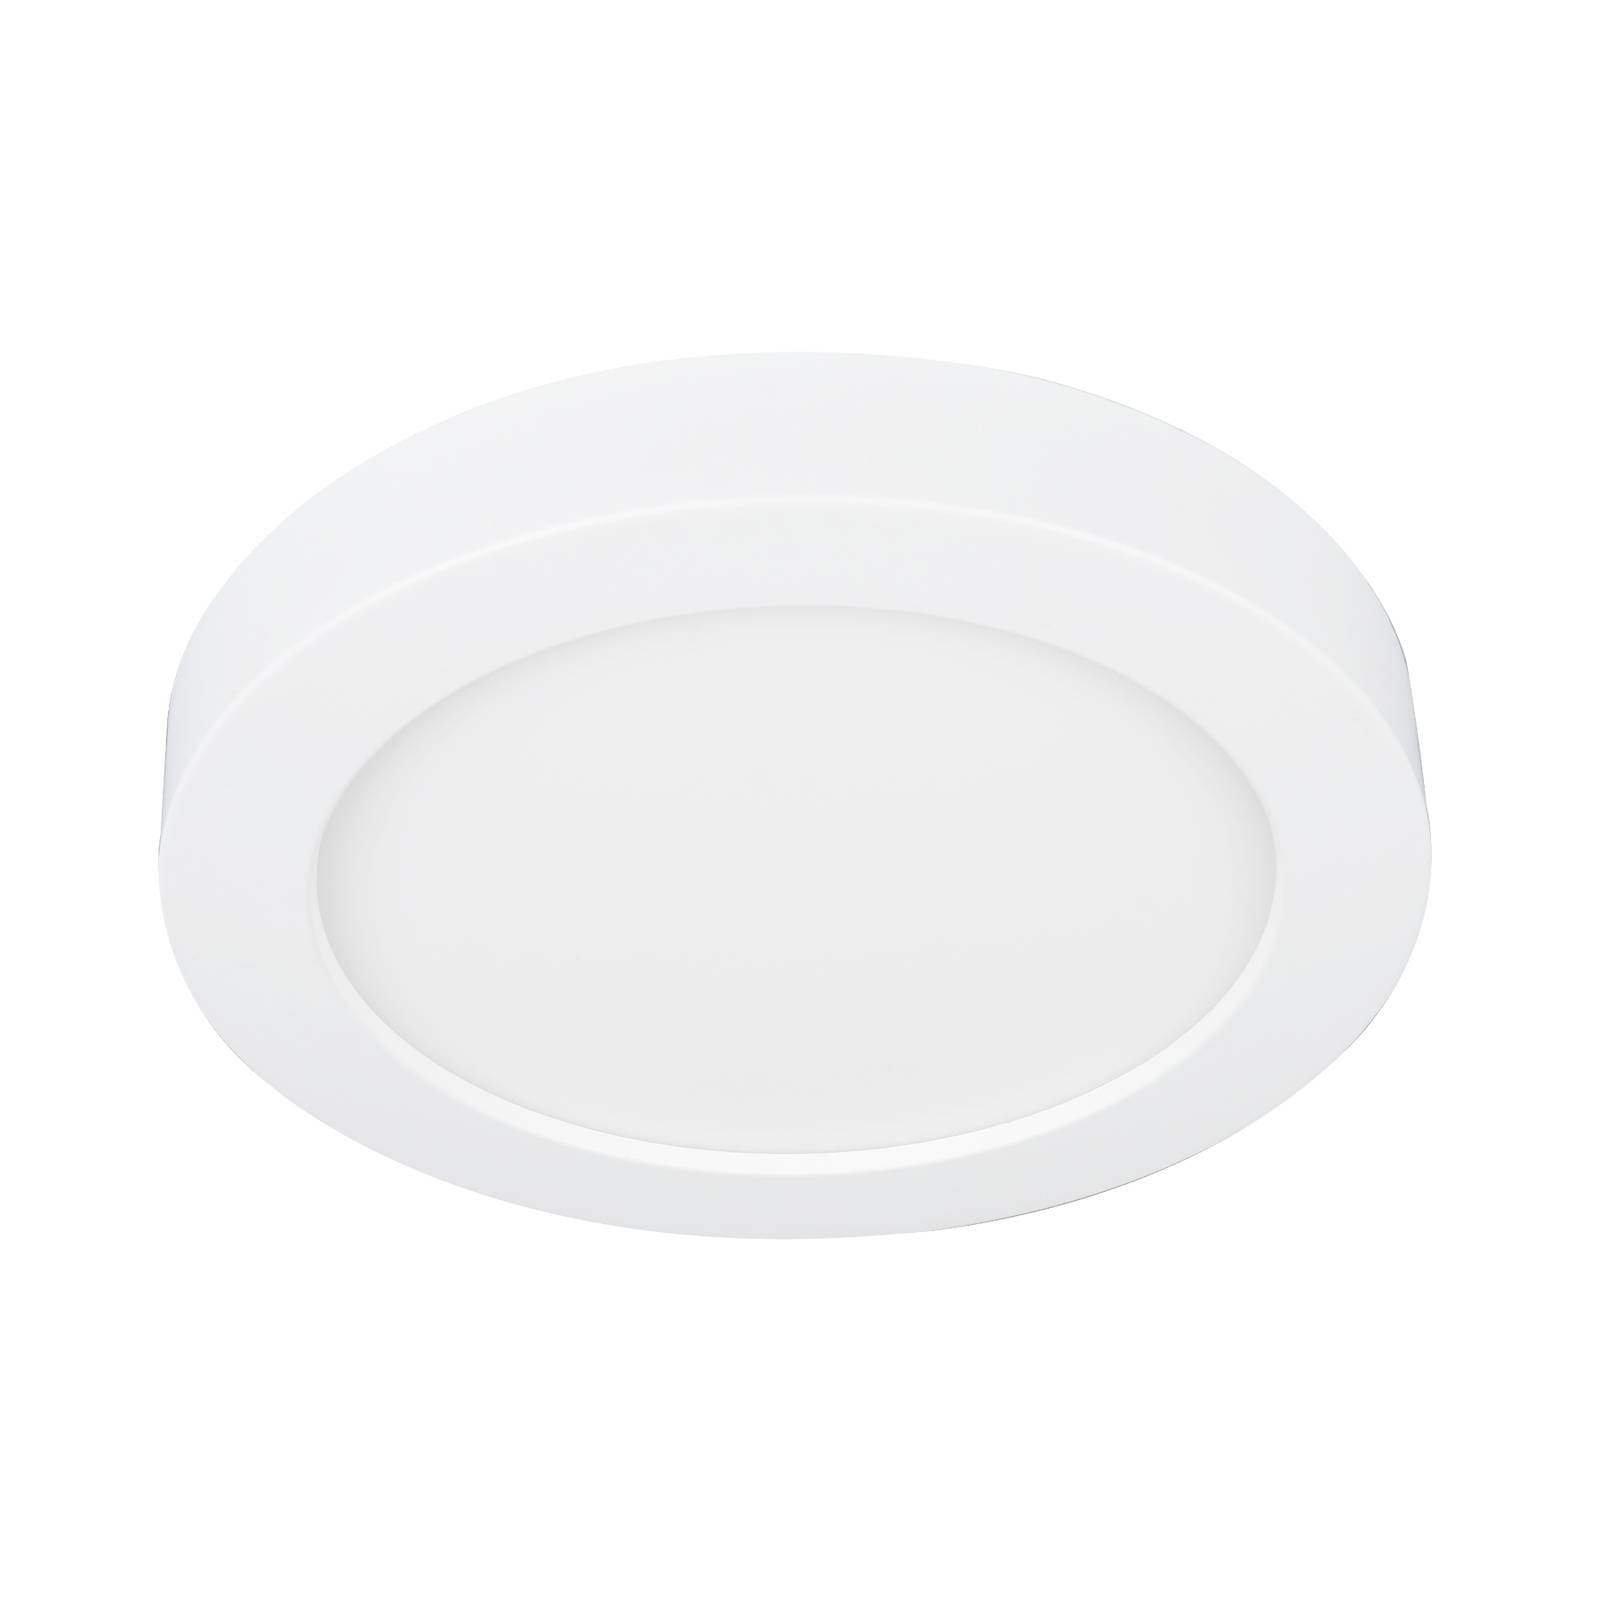 Prios Edwina LED ceiling light, white, 24.5 cm